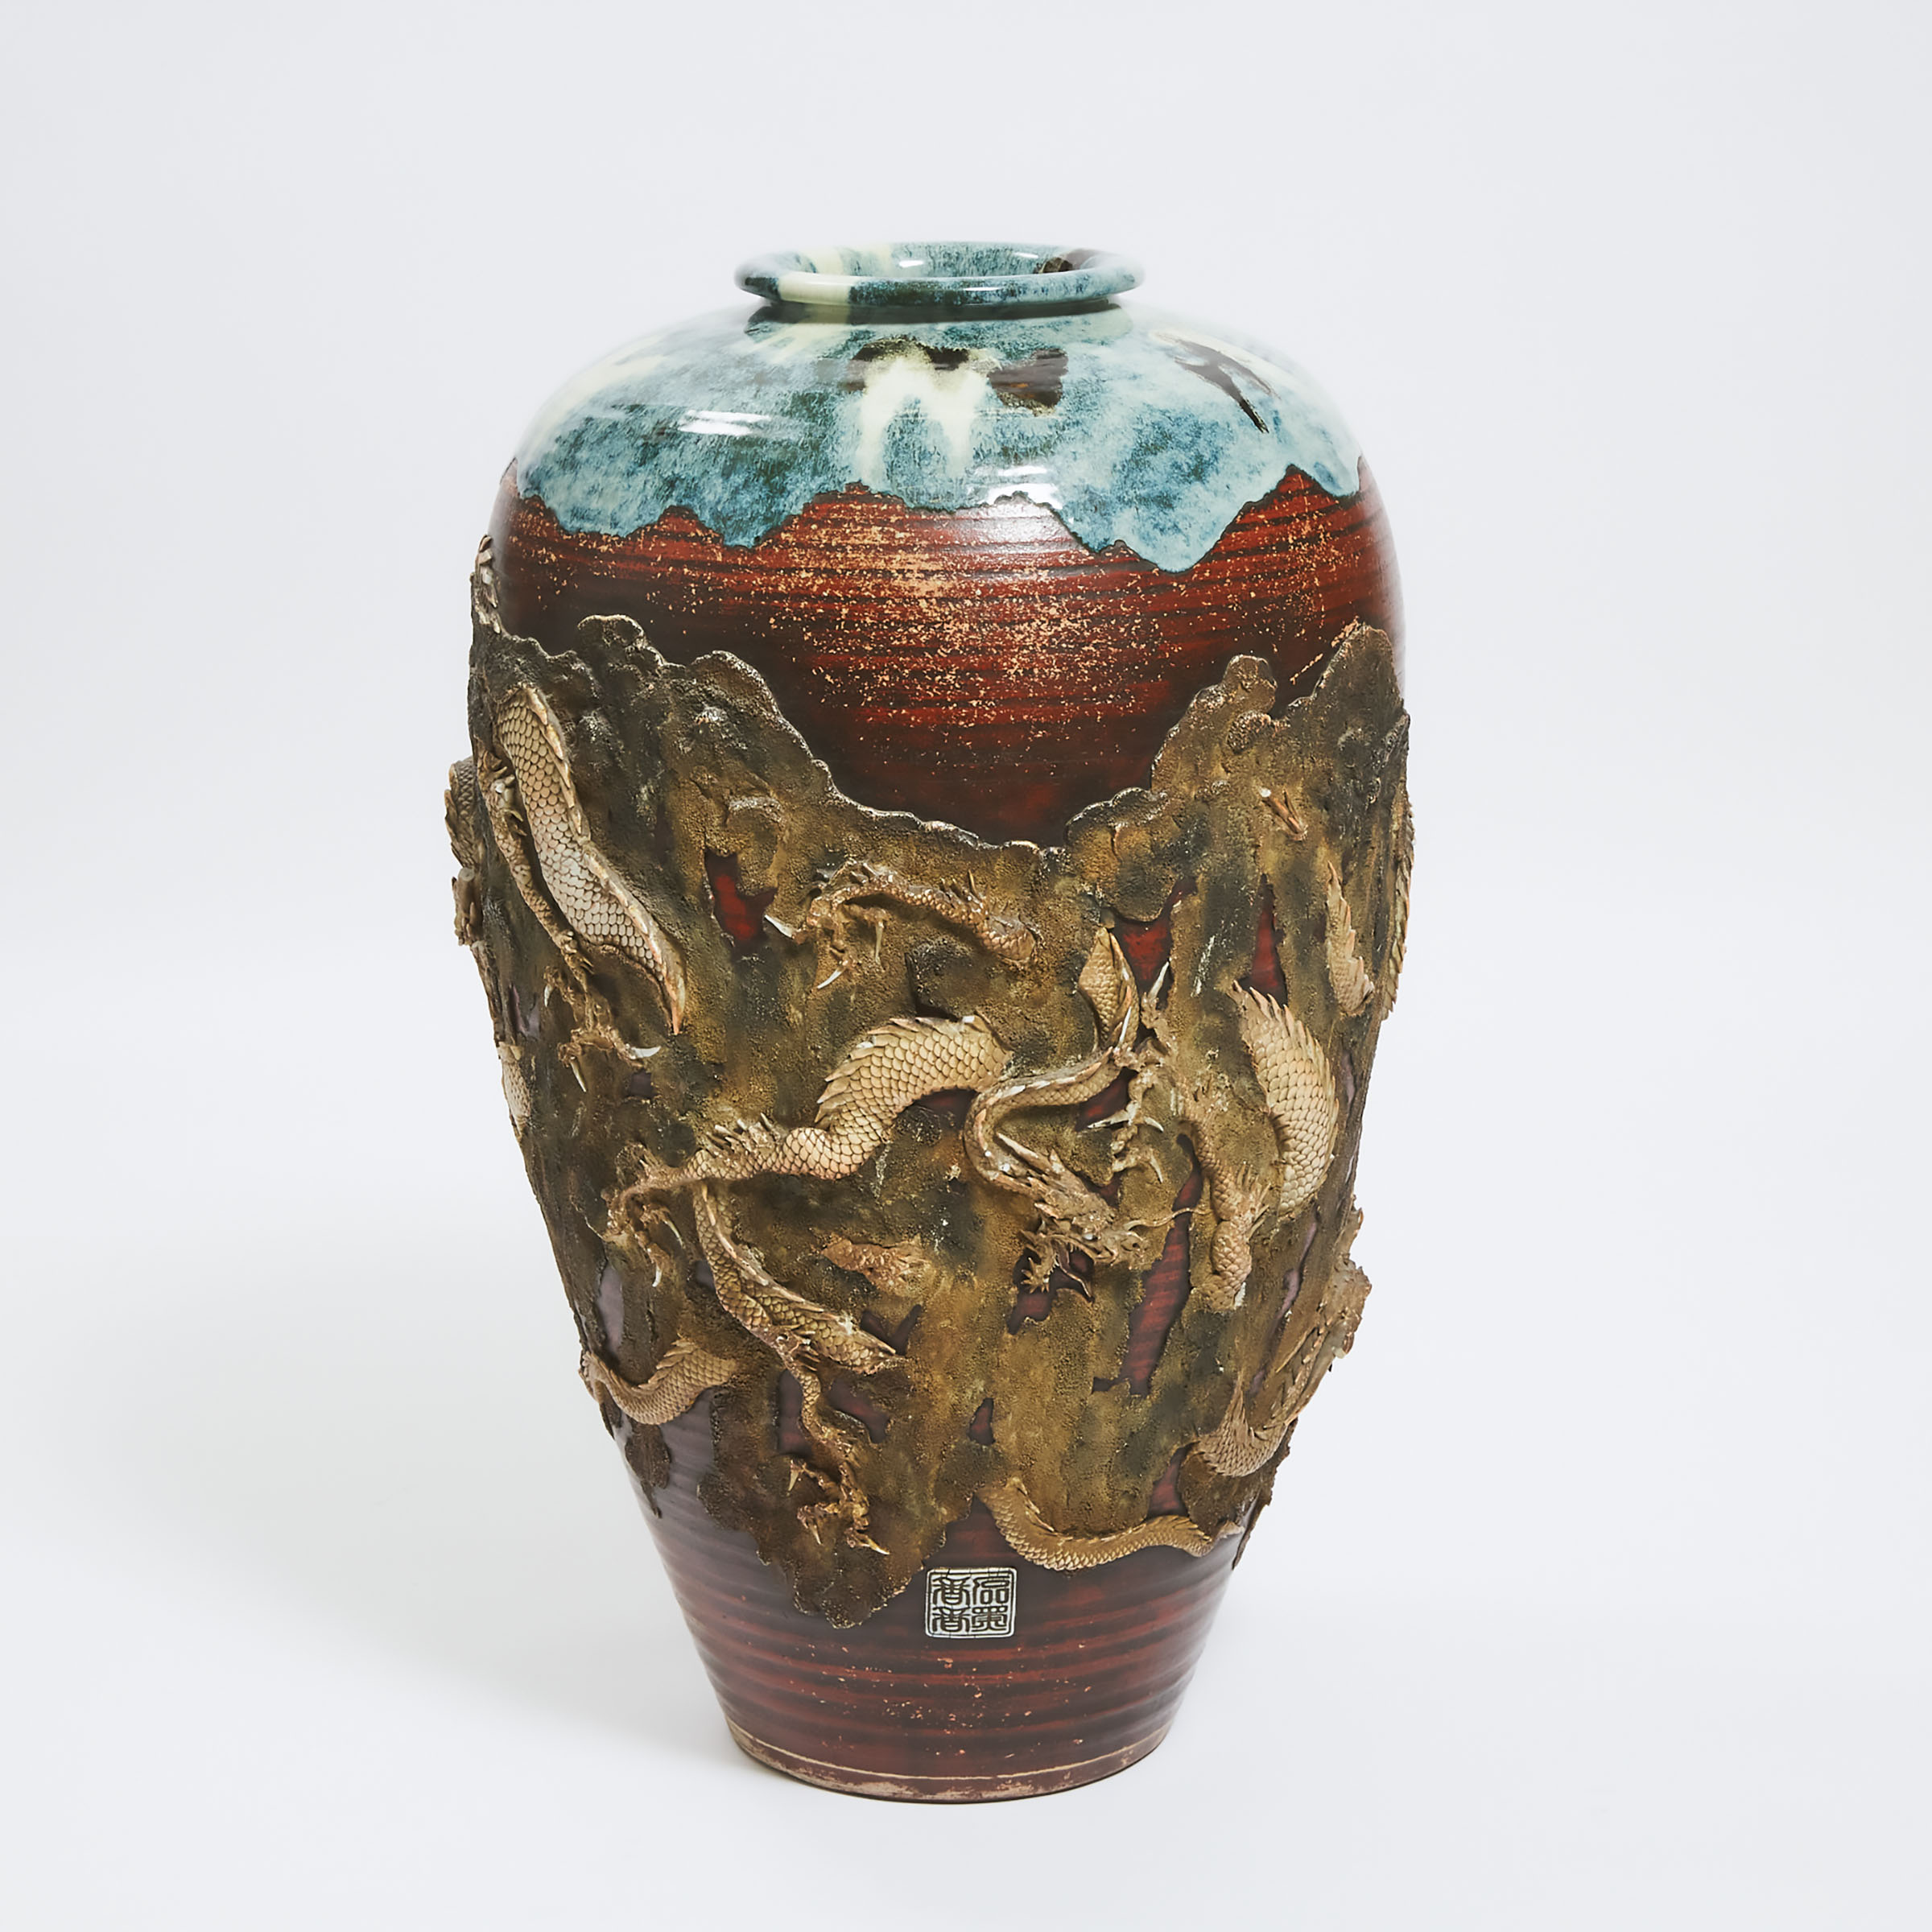 By Ishiguro Kuko, A Monumental Sumidagawa Ceramic 'Dragon' Vase, Meiji/Taisho Period